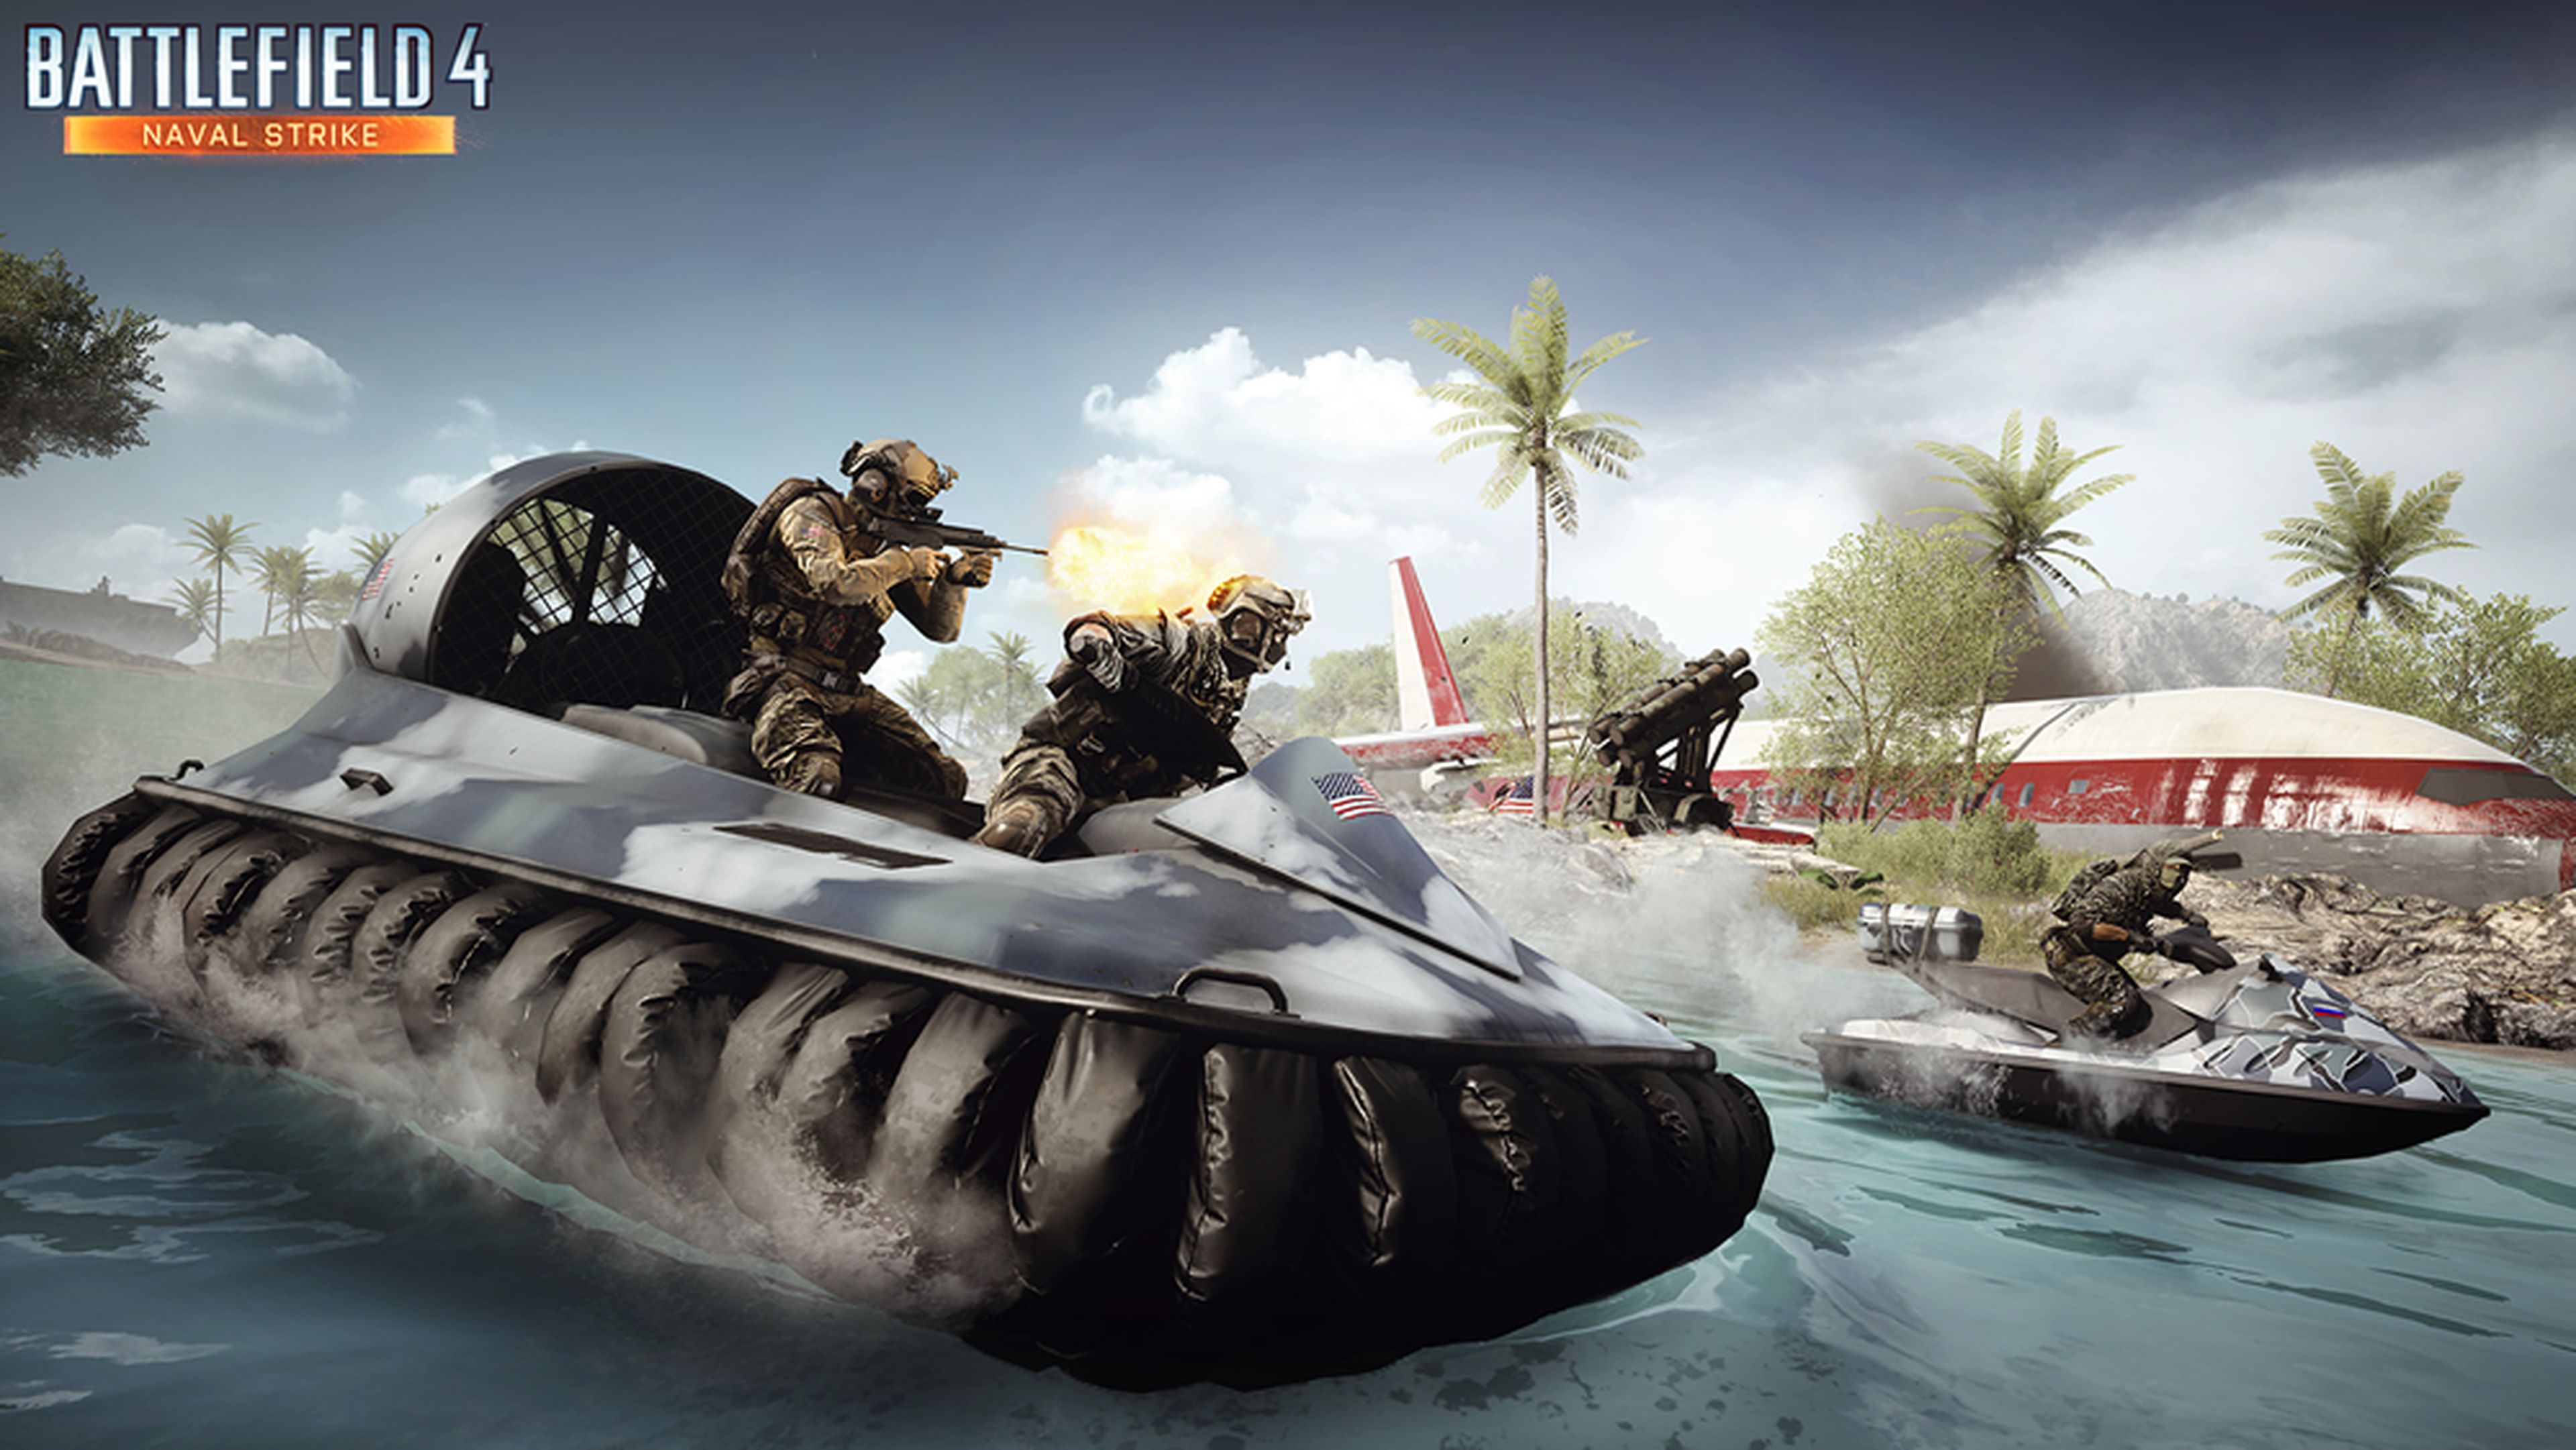 Ya disponible Battlefield 4 Naval Strike para Xbox One y PC